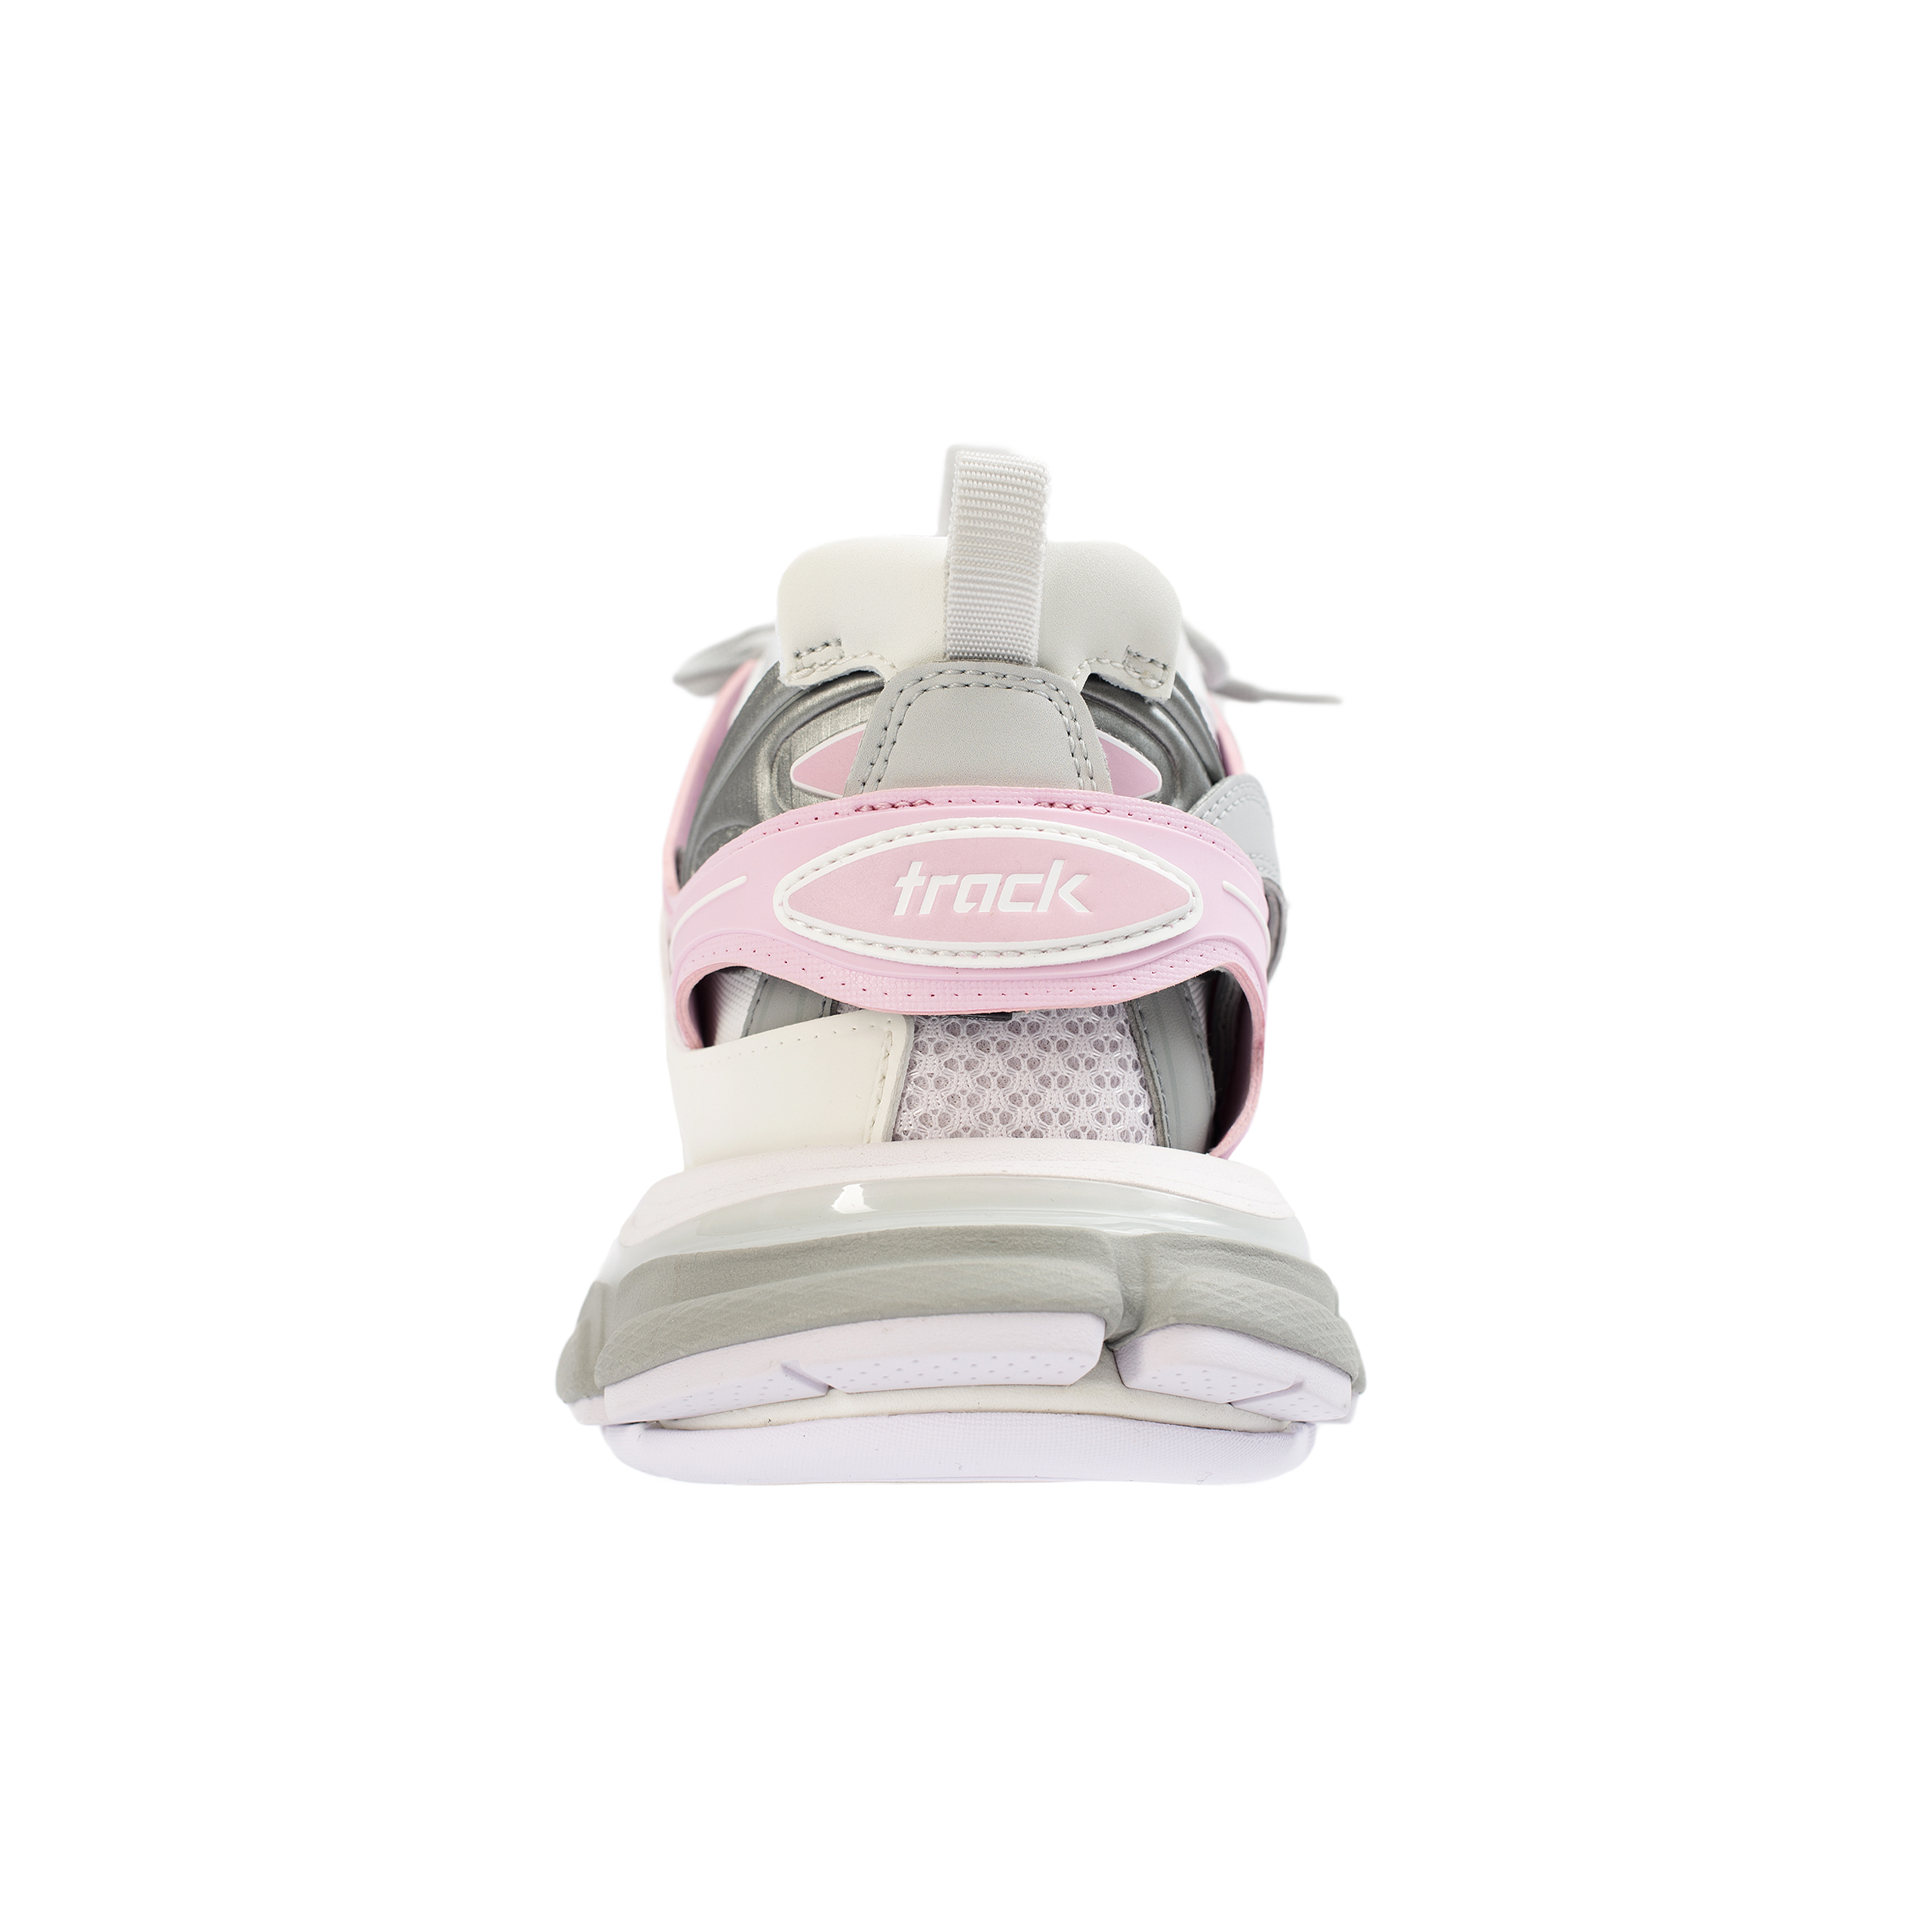 Розовые кроссовки track с подсветкой Balenciaga 555032/W3AD6/1258, размер 38;37;36;41;40;39 555032/W3AD6/1258 - фото 4